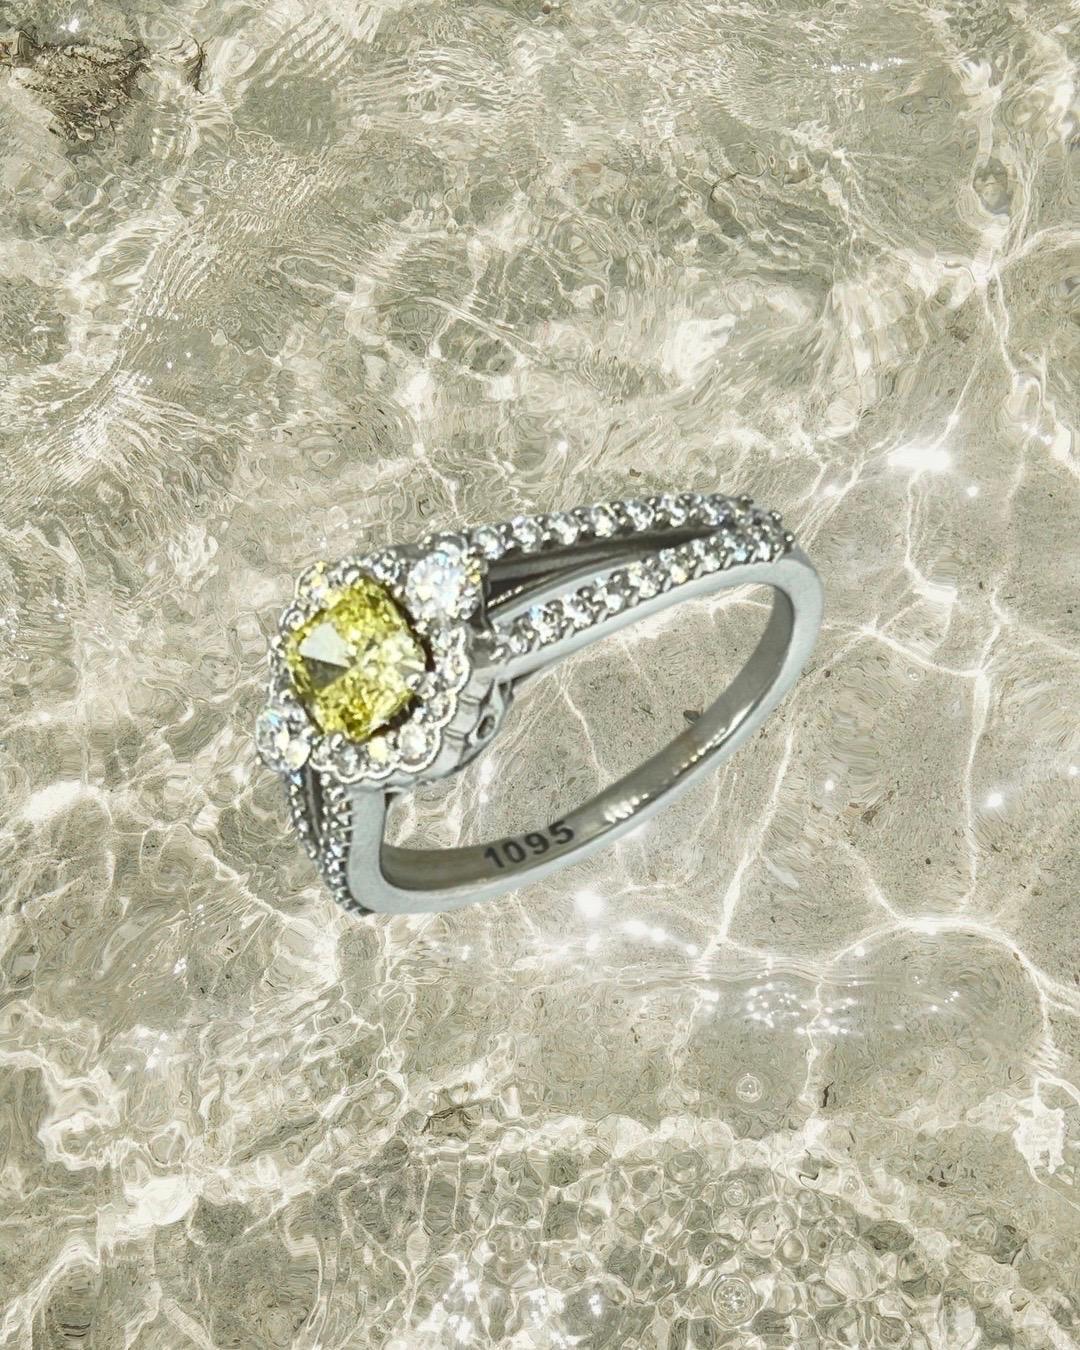 yellow engagement ring distributor -china -china -forum -blog -wikipedia -.cn -.gov -alibaba